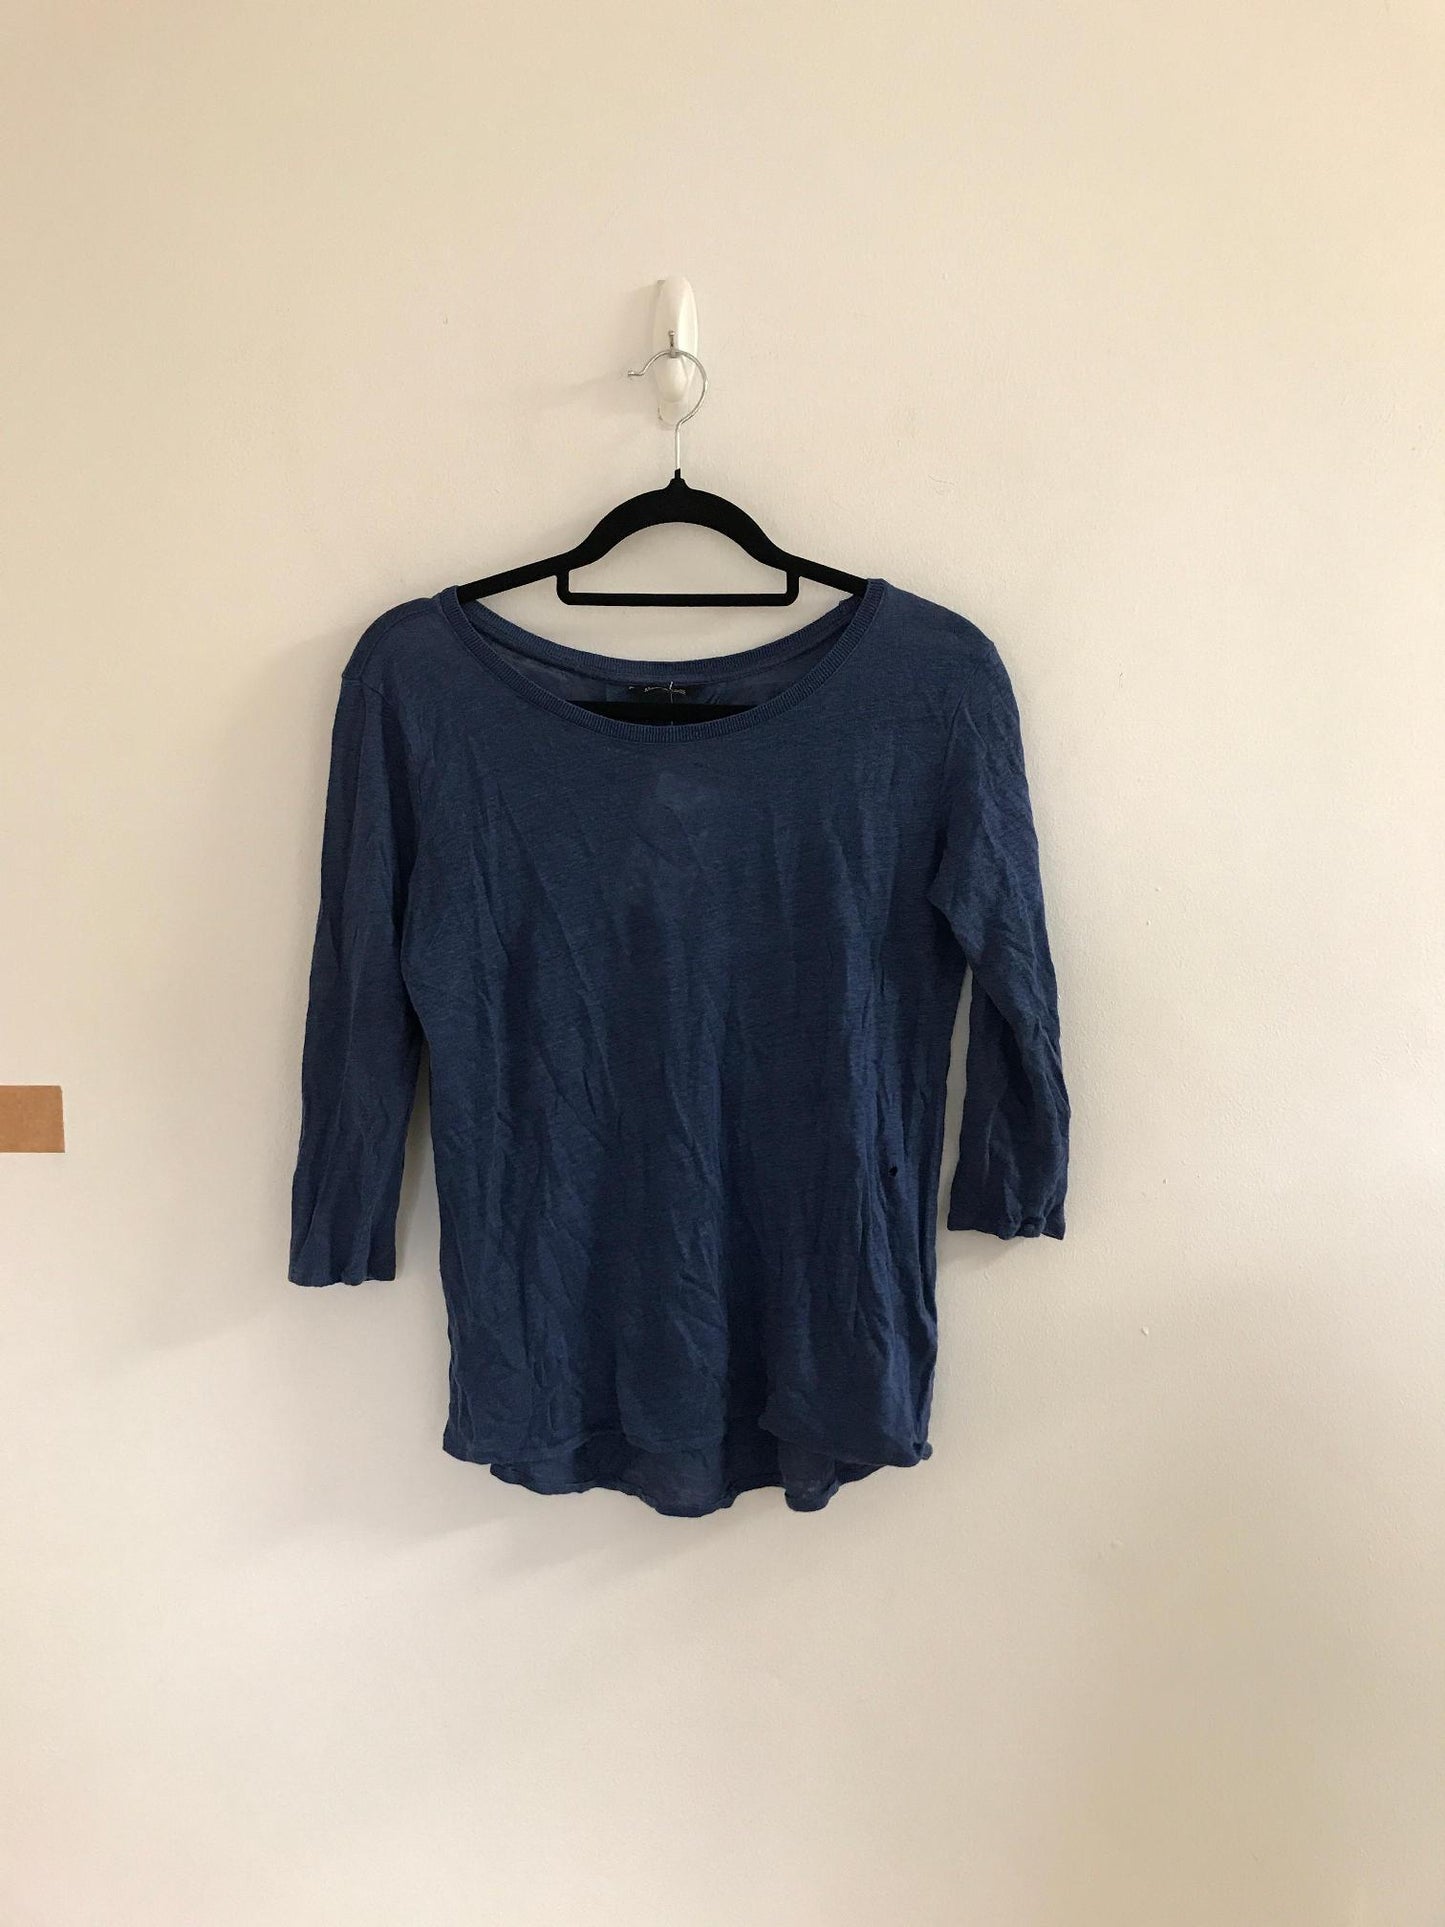 Blue Thin Knit Top, Massimo Dutti, Size M- Damaged Item Sale